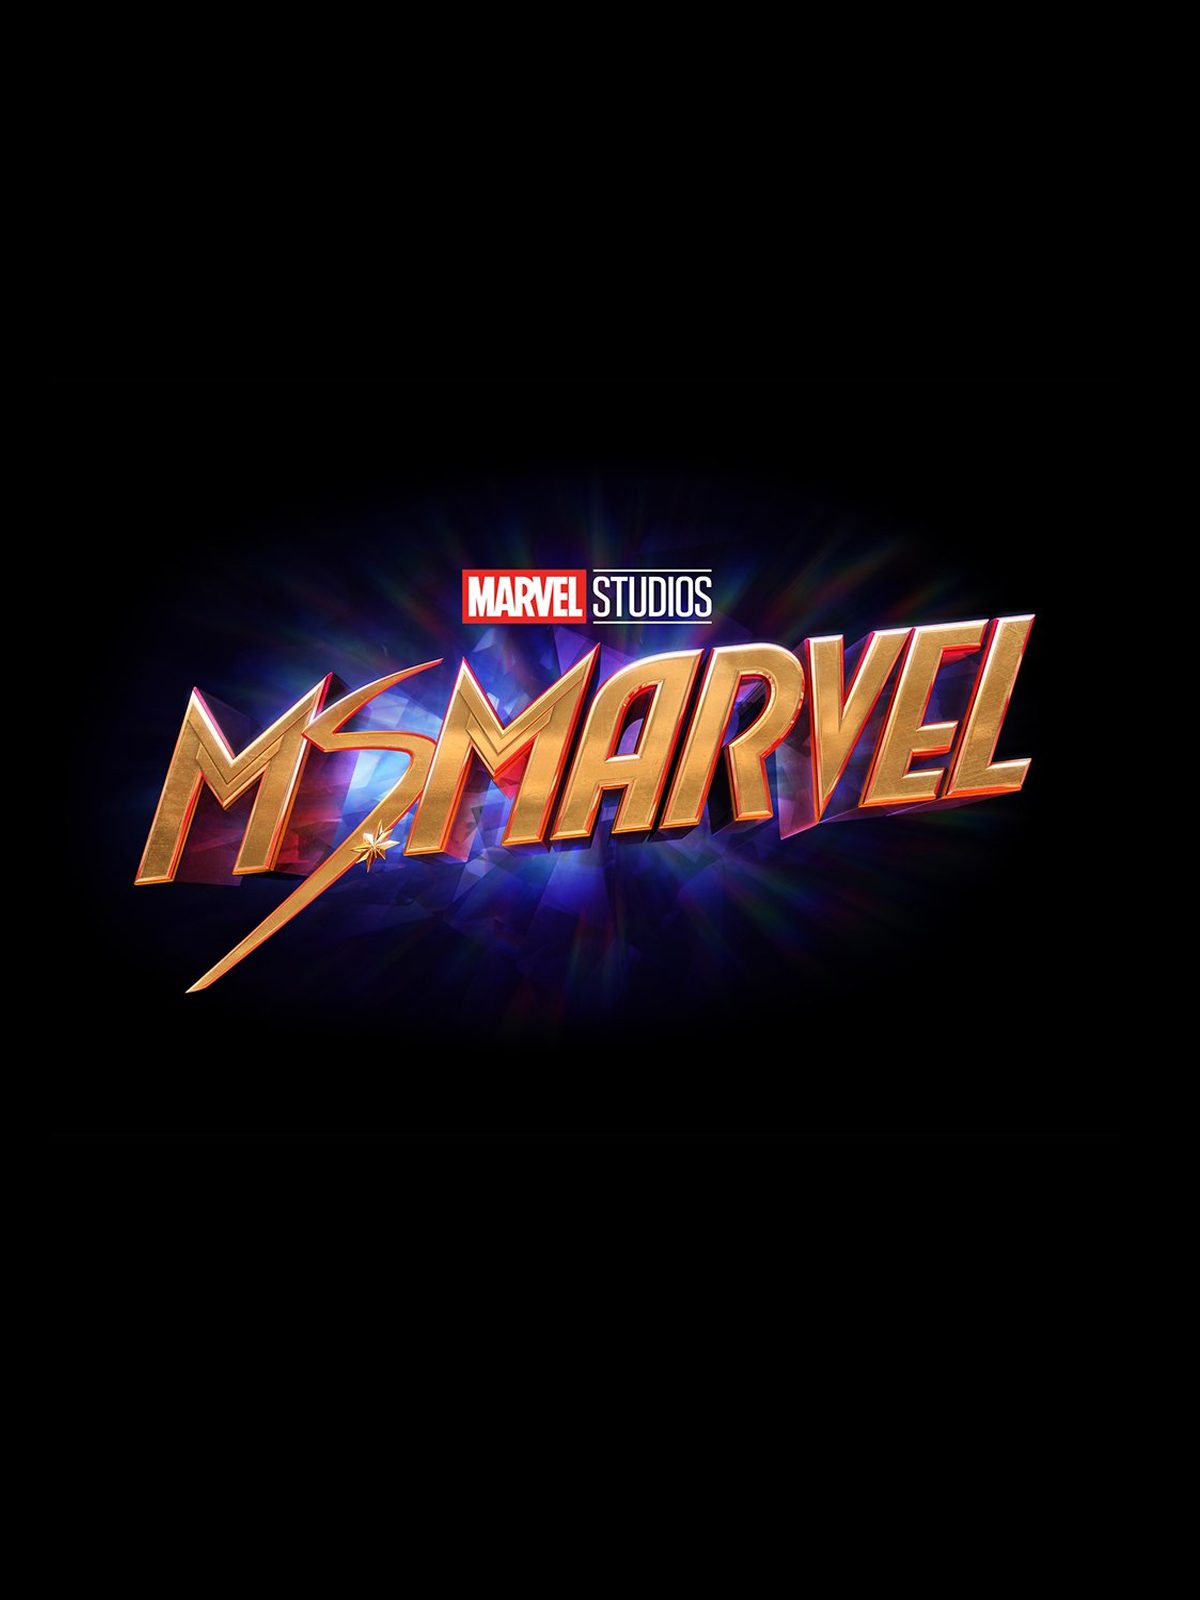 Ms. Marvel official trailer revealed